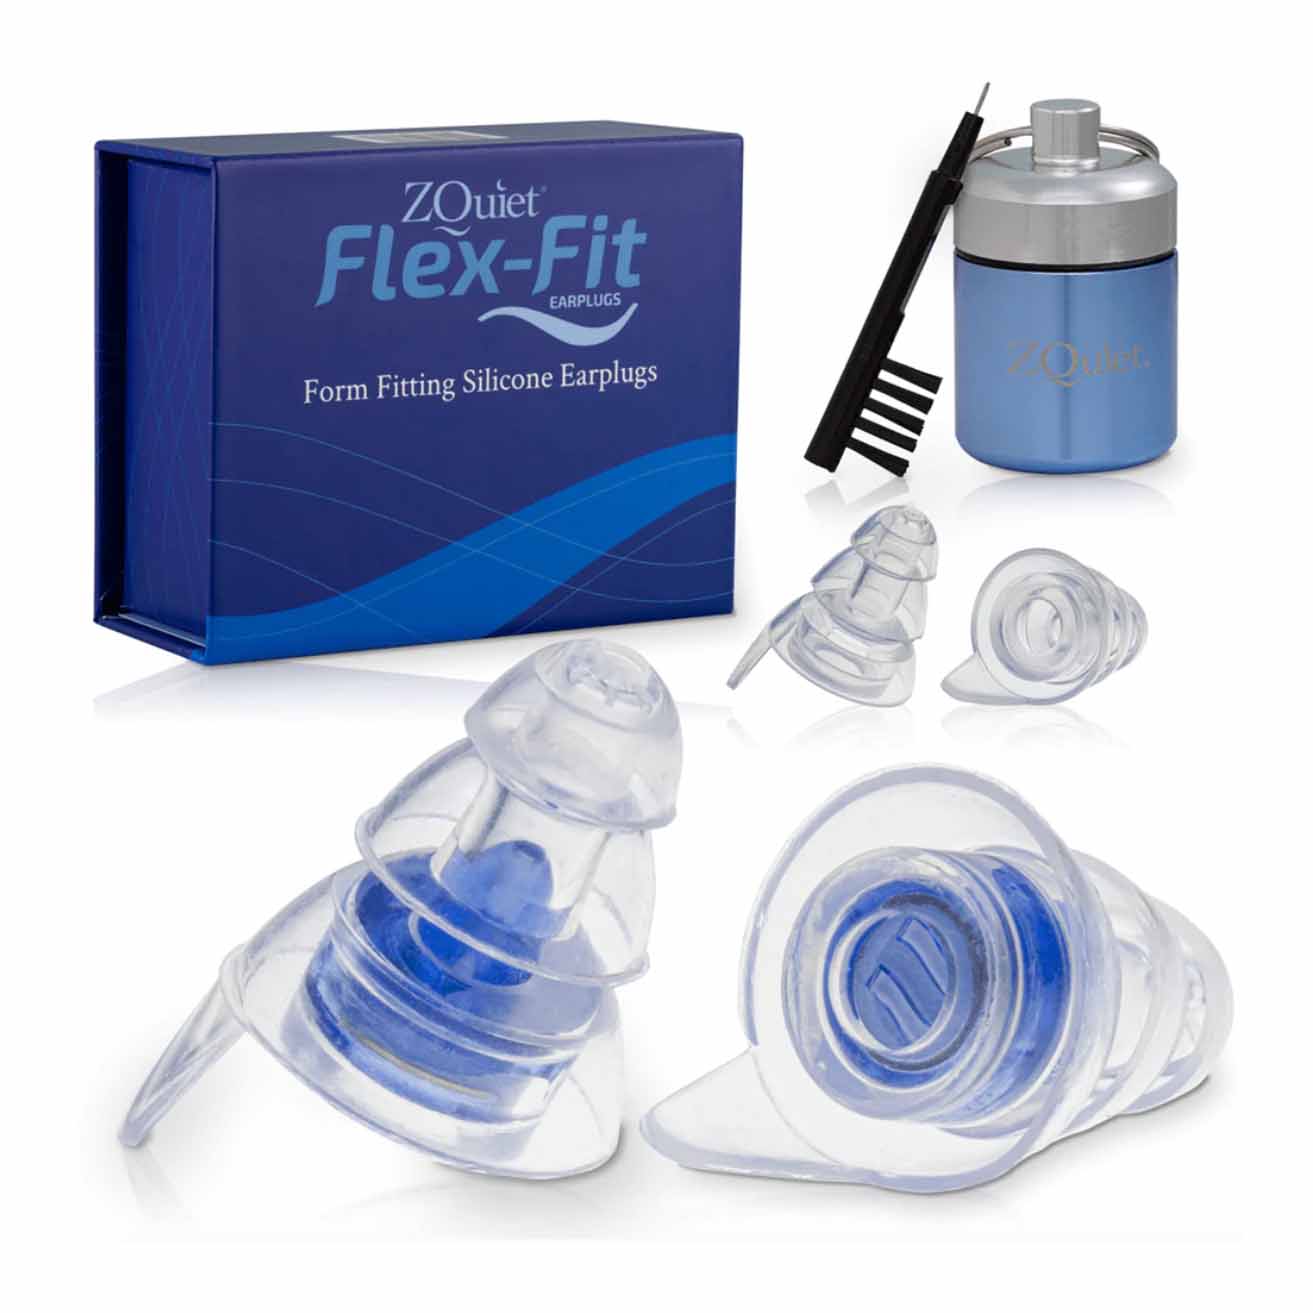 zquiet flex-fit silicone earplugs